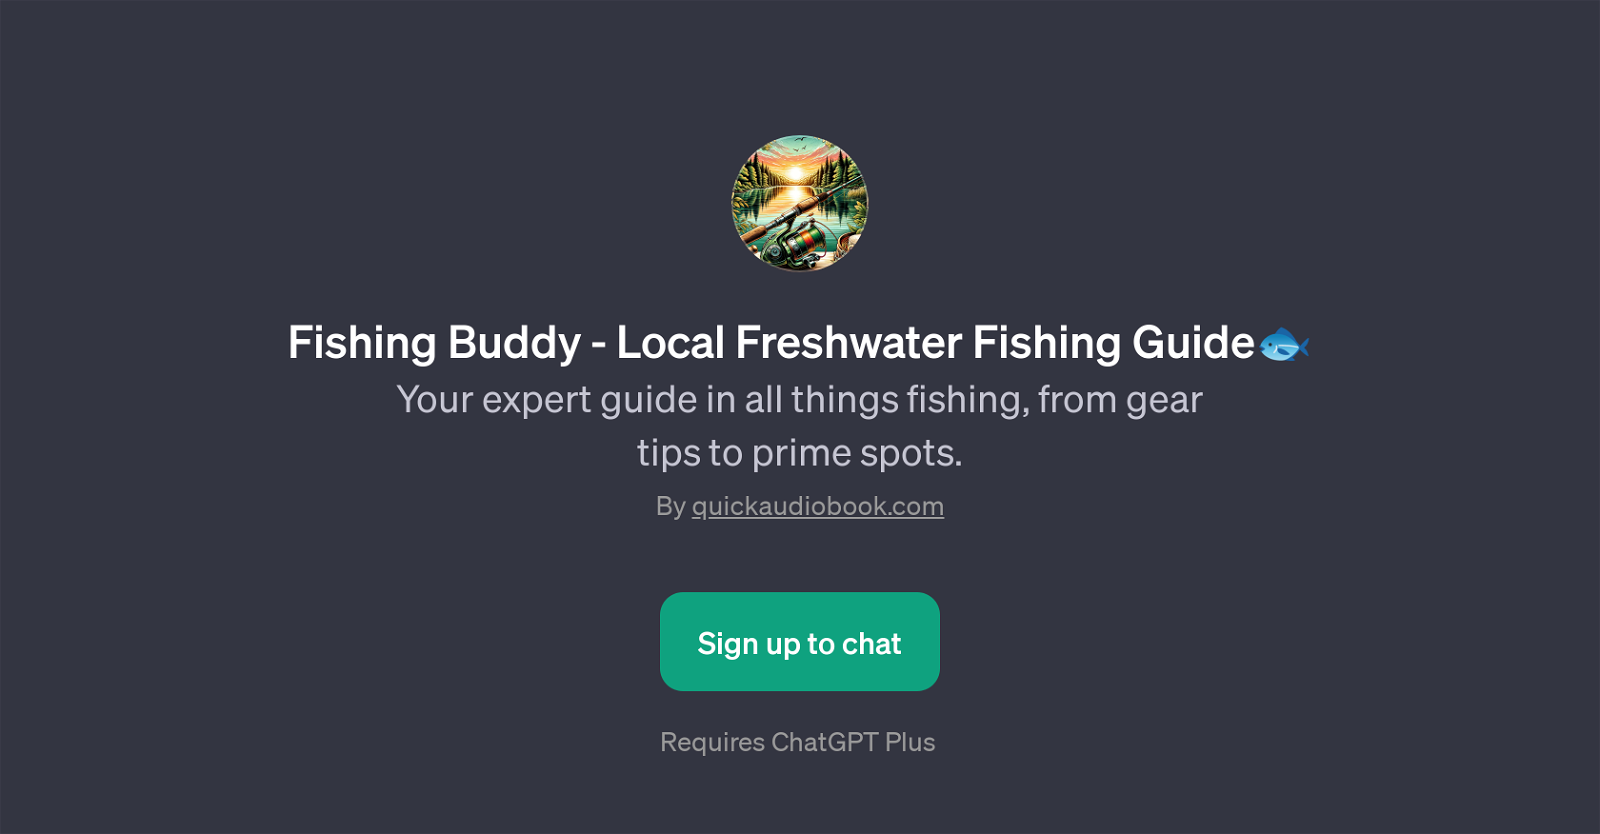 Fishing Buddy - Local Freshwater Fishing Guide website